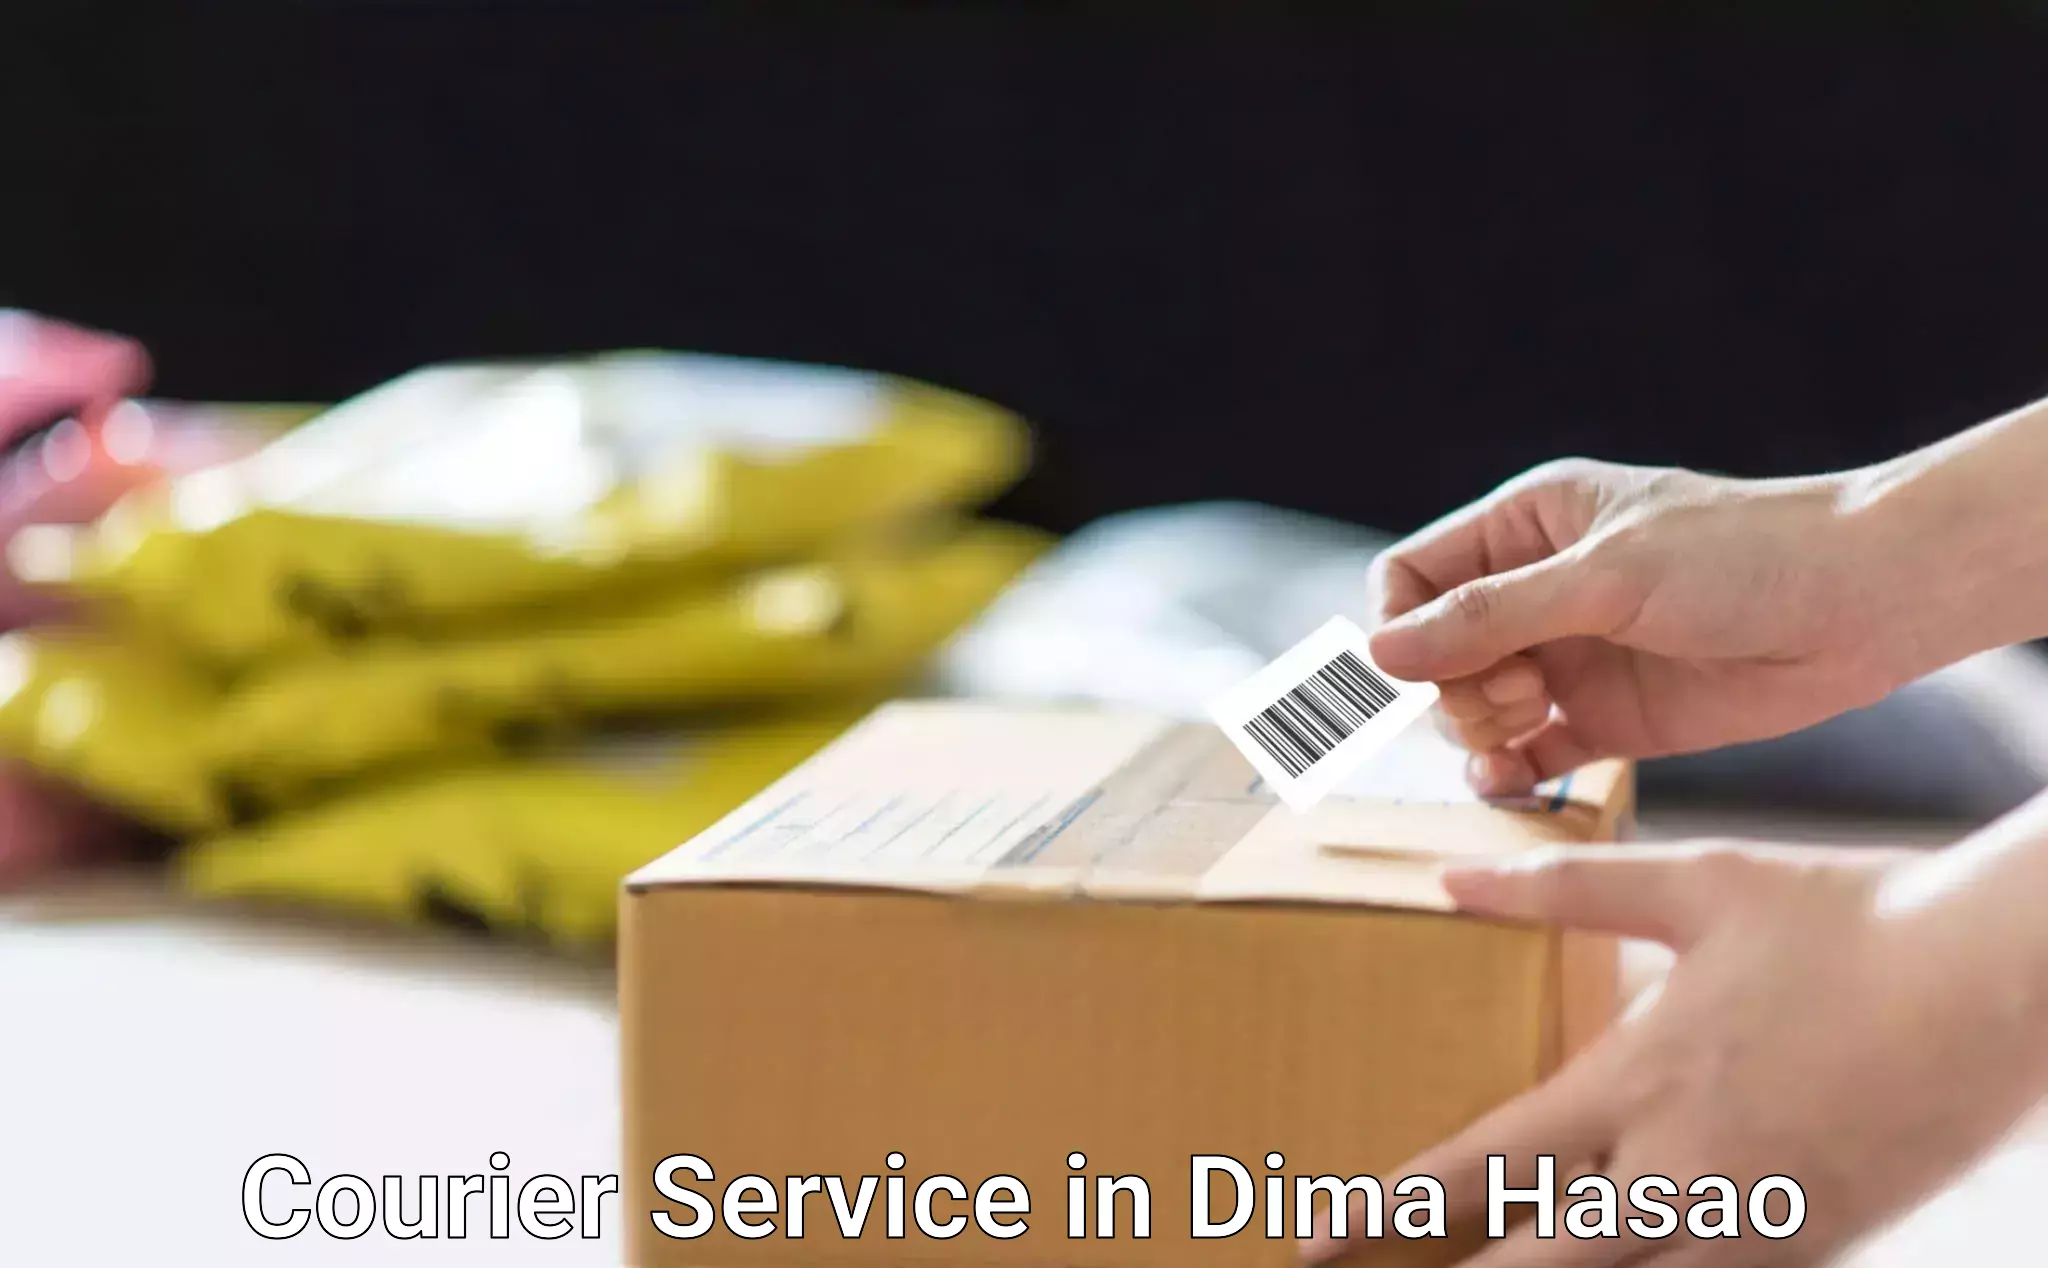 Advanced delivery network in Dima Hasao